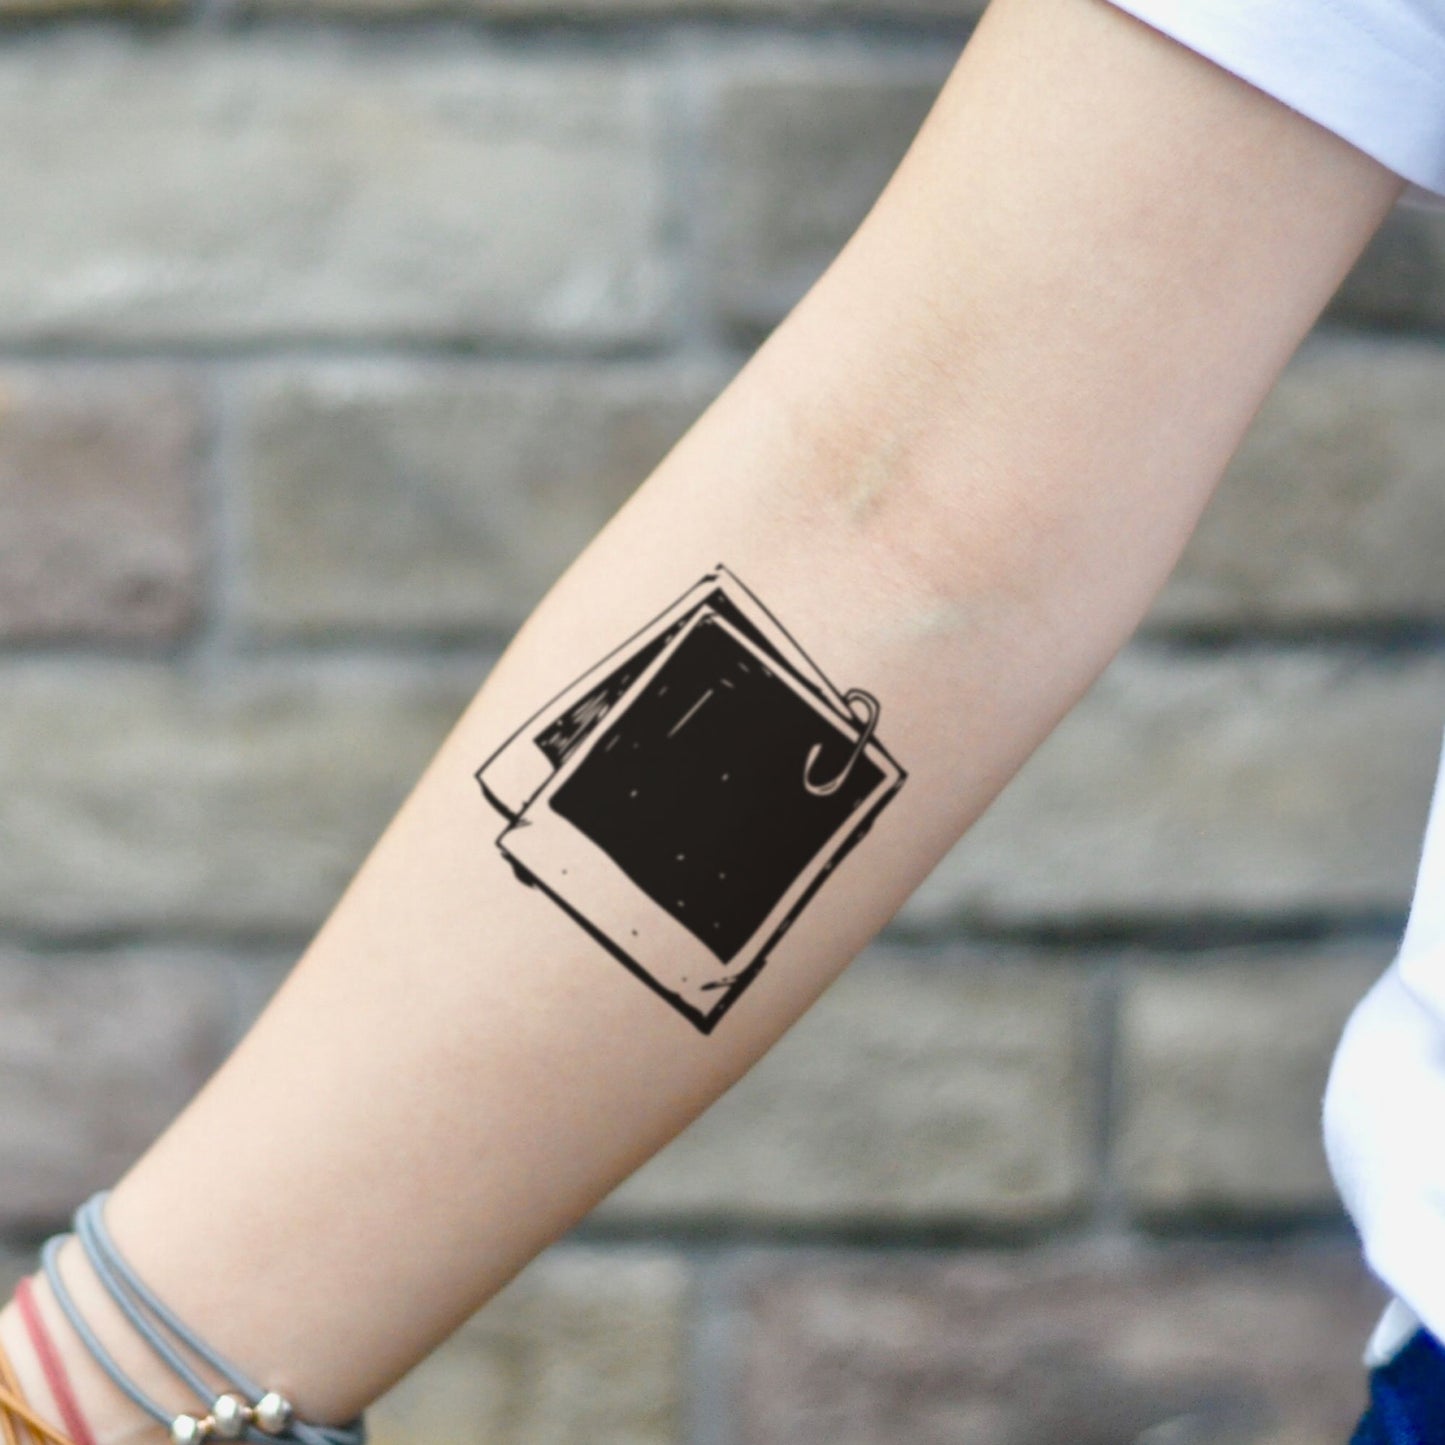 fake small polaroid traditional old school pop culture punk minimalist temporary tattoo sticker design idea on inner arm